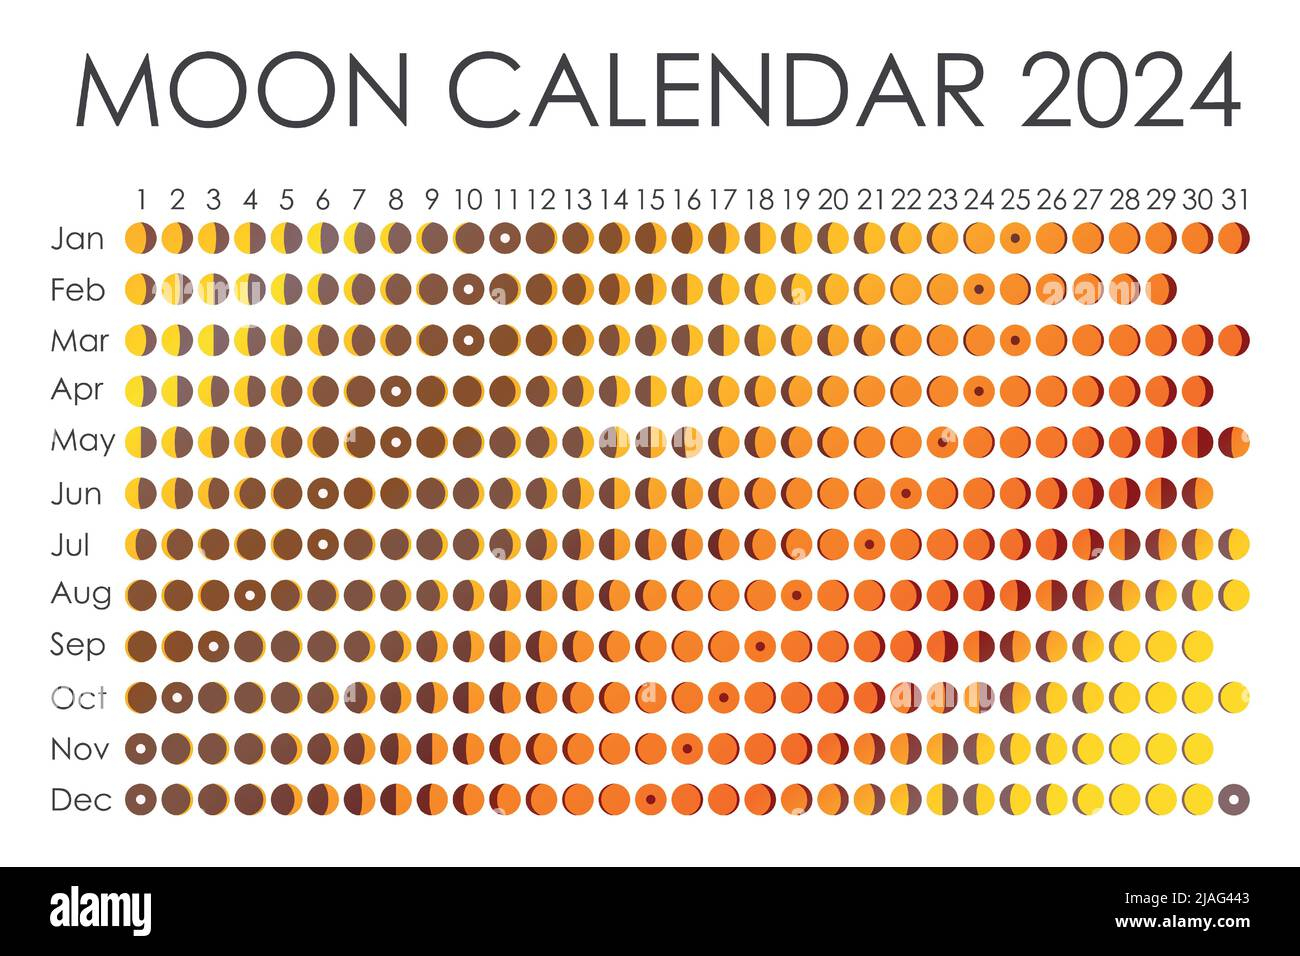 2024 Moon Calendar. Astrological Calendar Design. Planner. Place for 2024 Moon Phase Calendar Printable